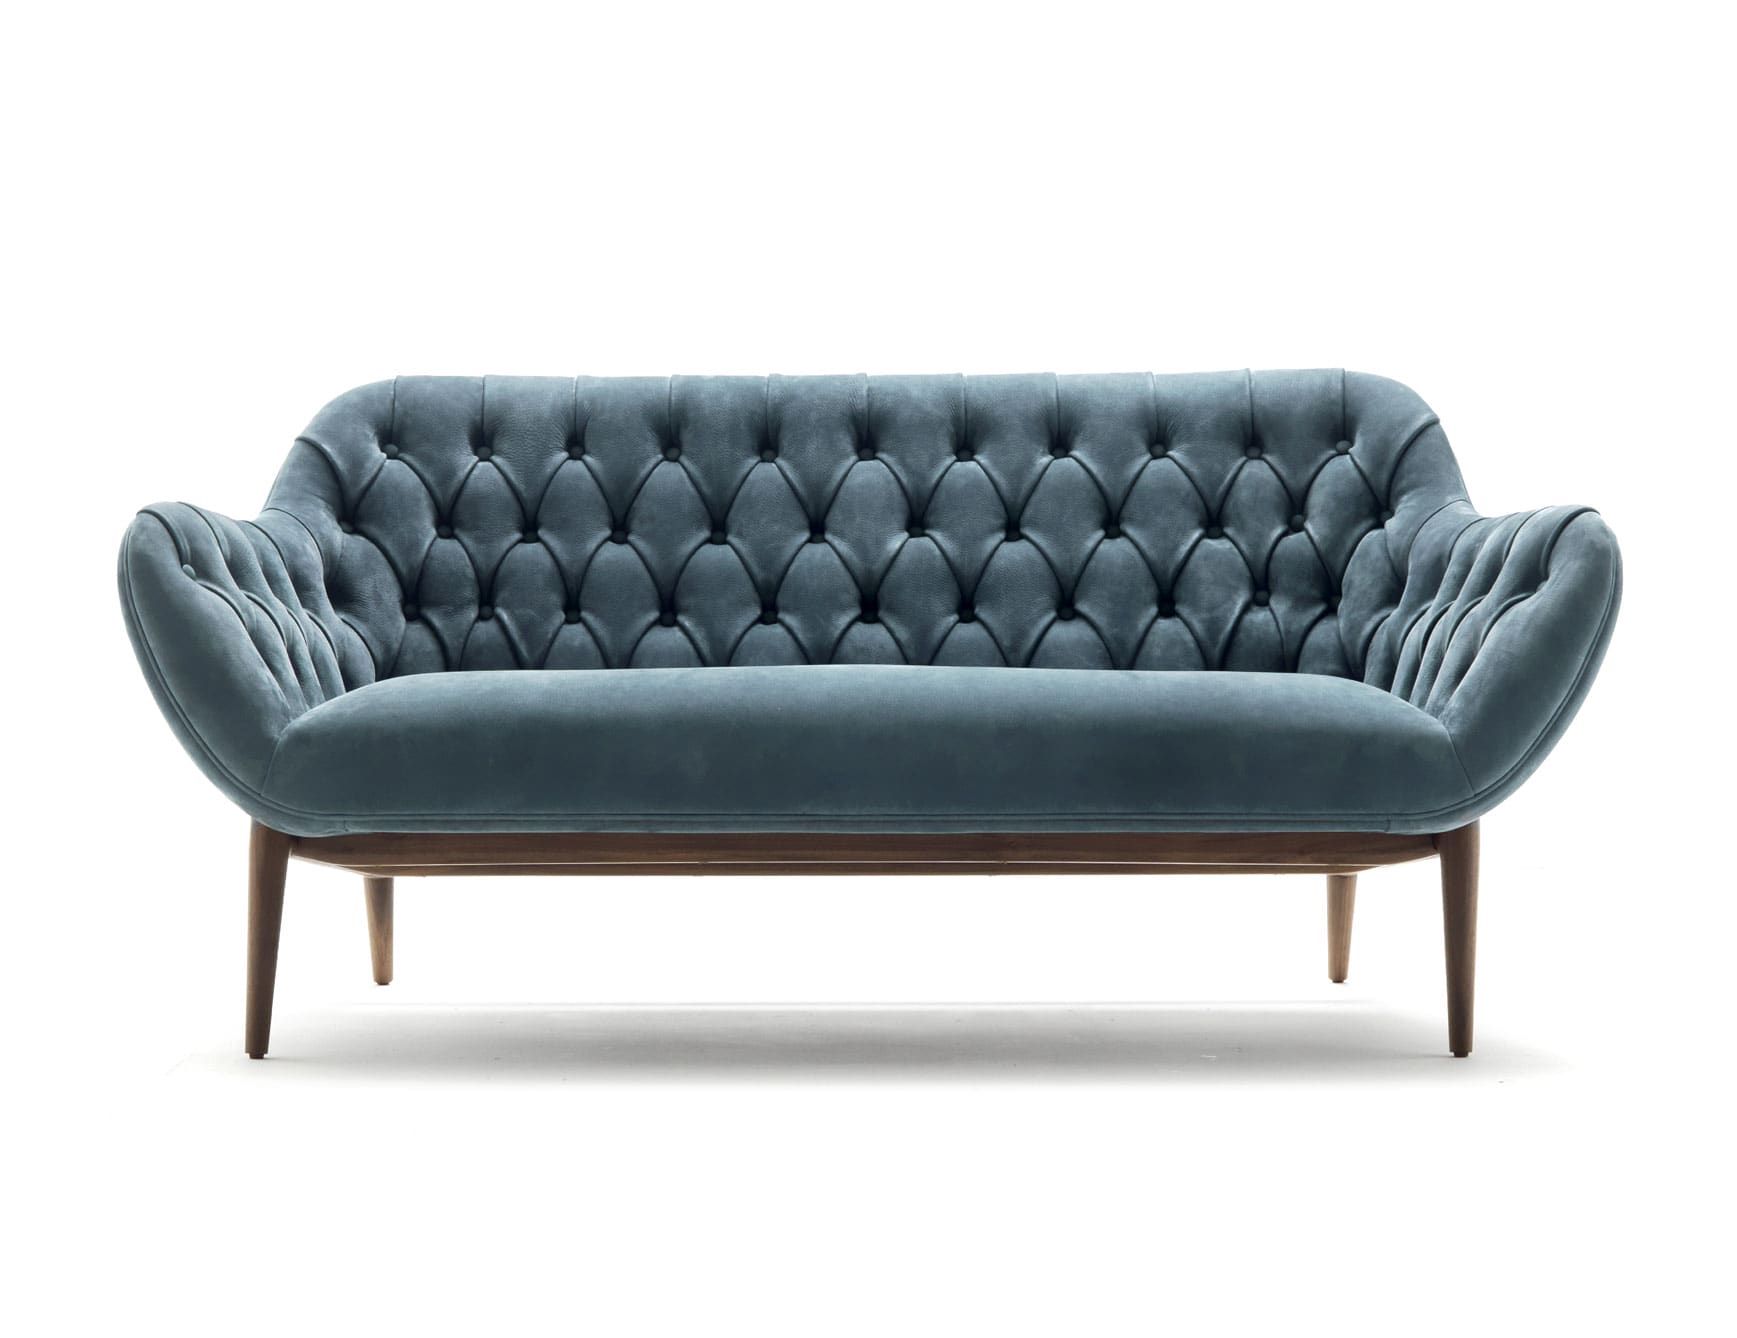 Jade modern Italian sofa chair with blue leather